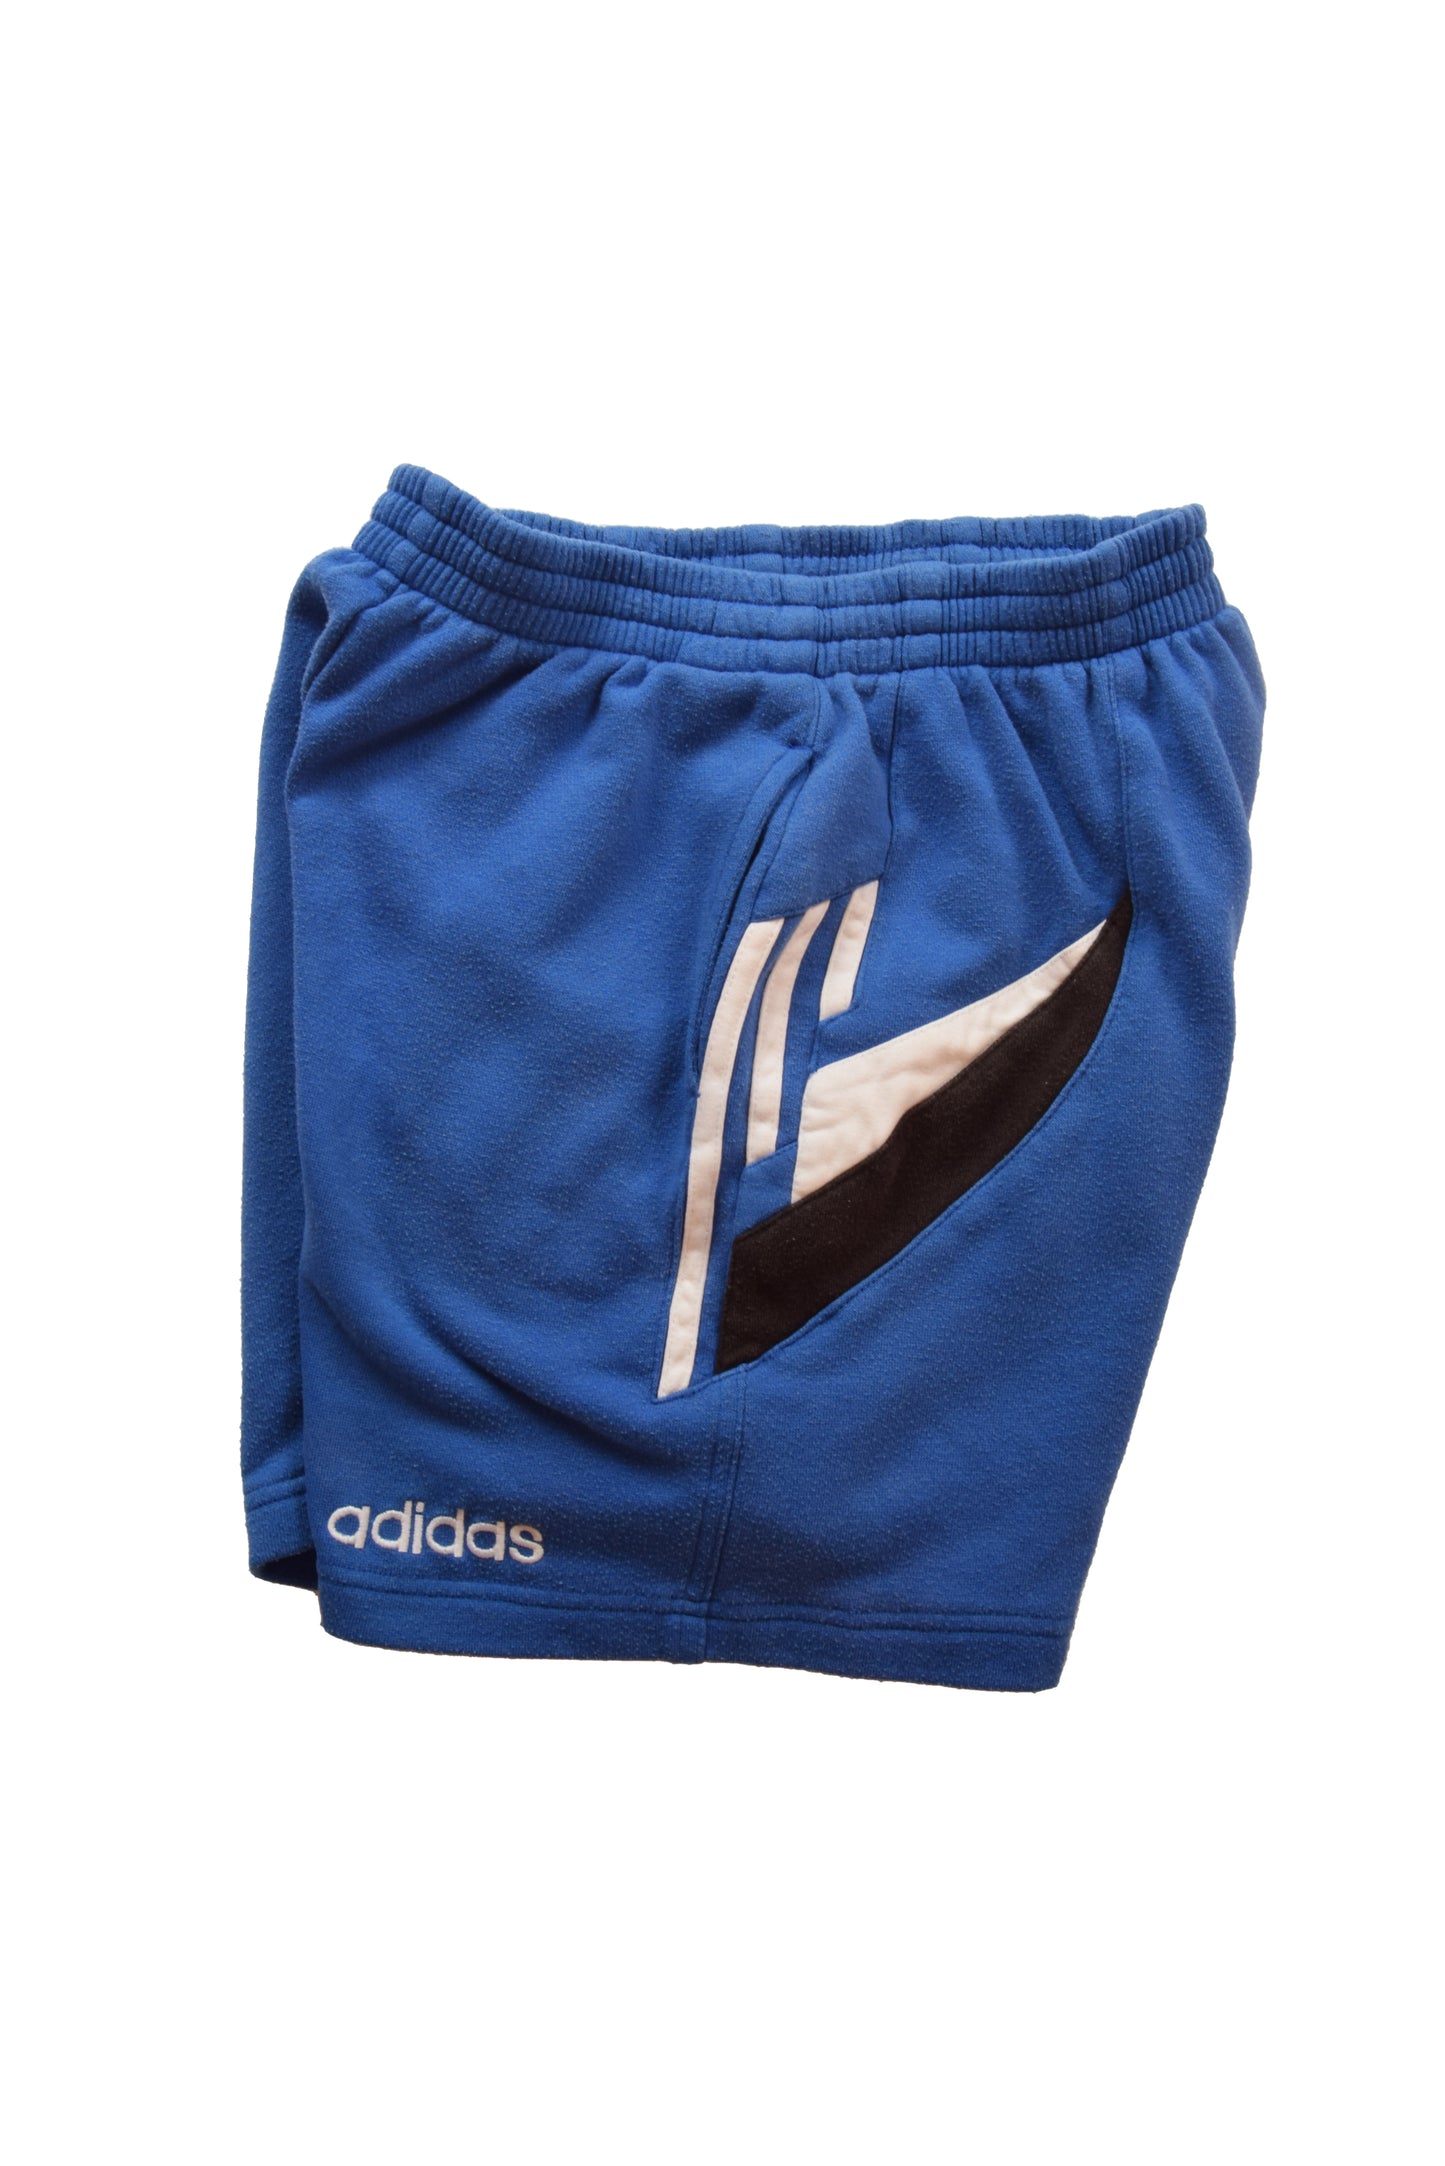 Vintage 90's Adidas Shorts Size S-M Blue 